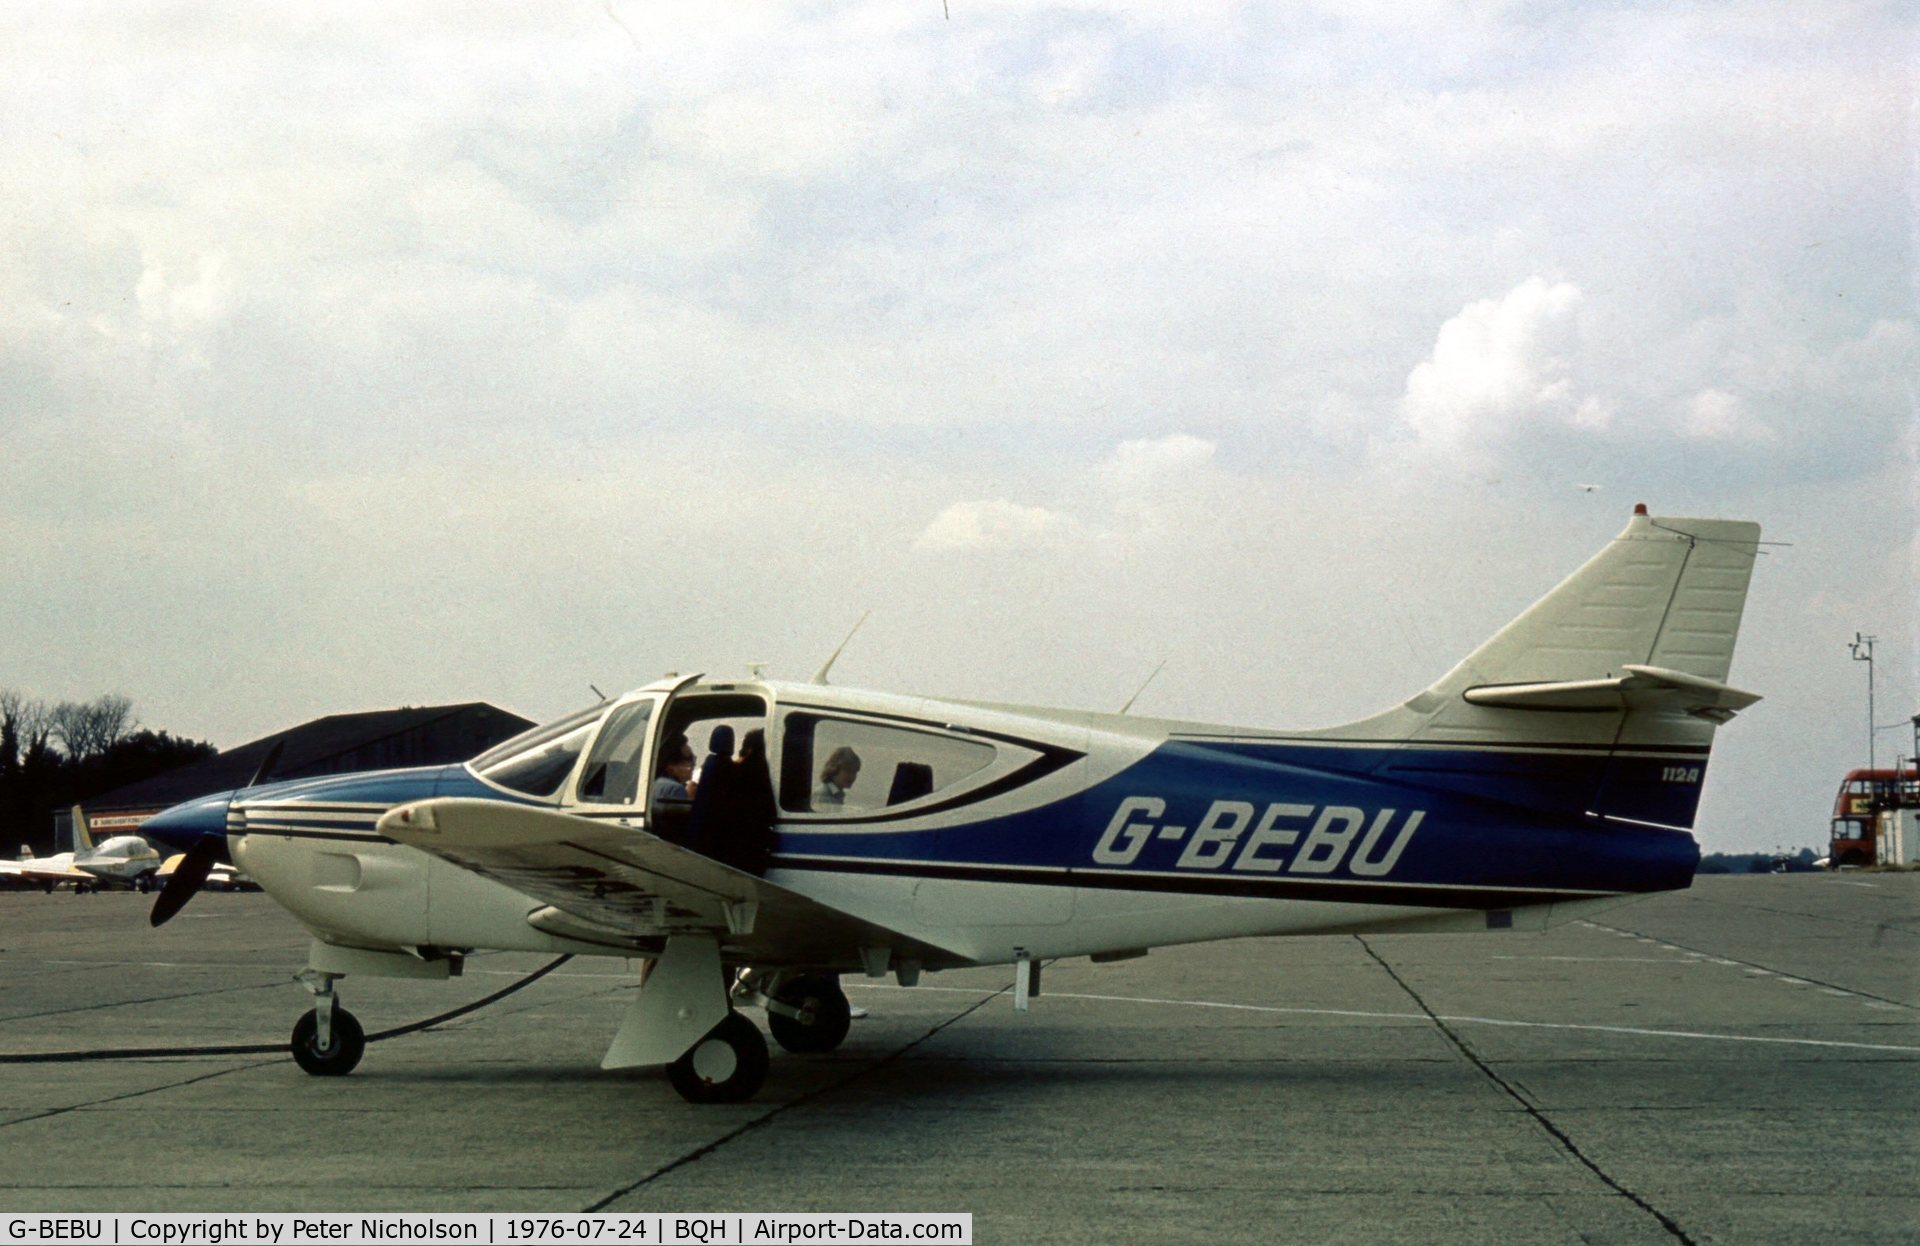 G-BEBU, 1975 Rockwell International 112 Commander C/N 272, A Biggin Hill resident seen during the Summer of 1976.